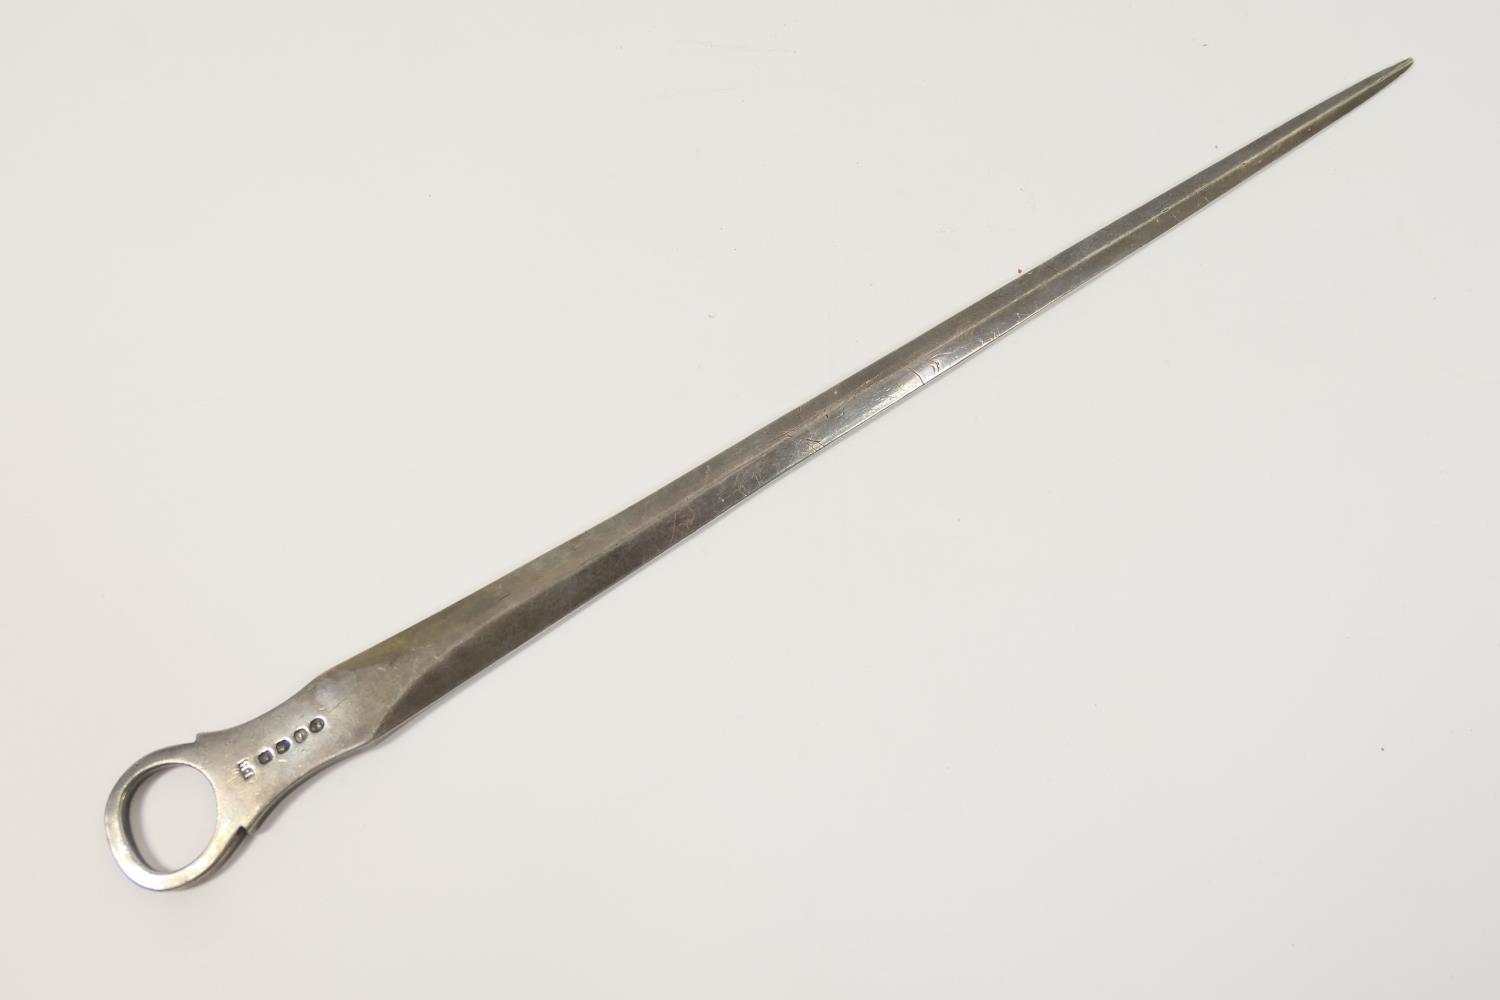 George IV silver meat skewer, by John Bridge, London 1820, length 38cm, weight approx. 157g (5.05